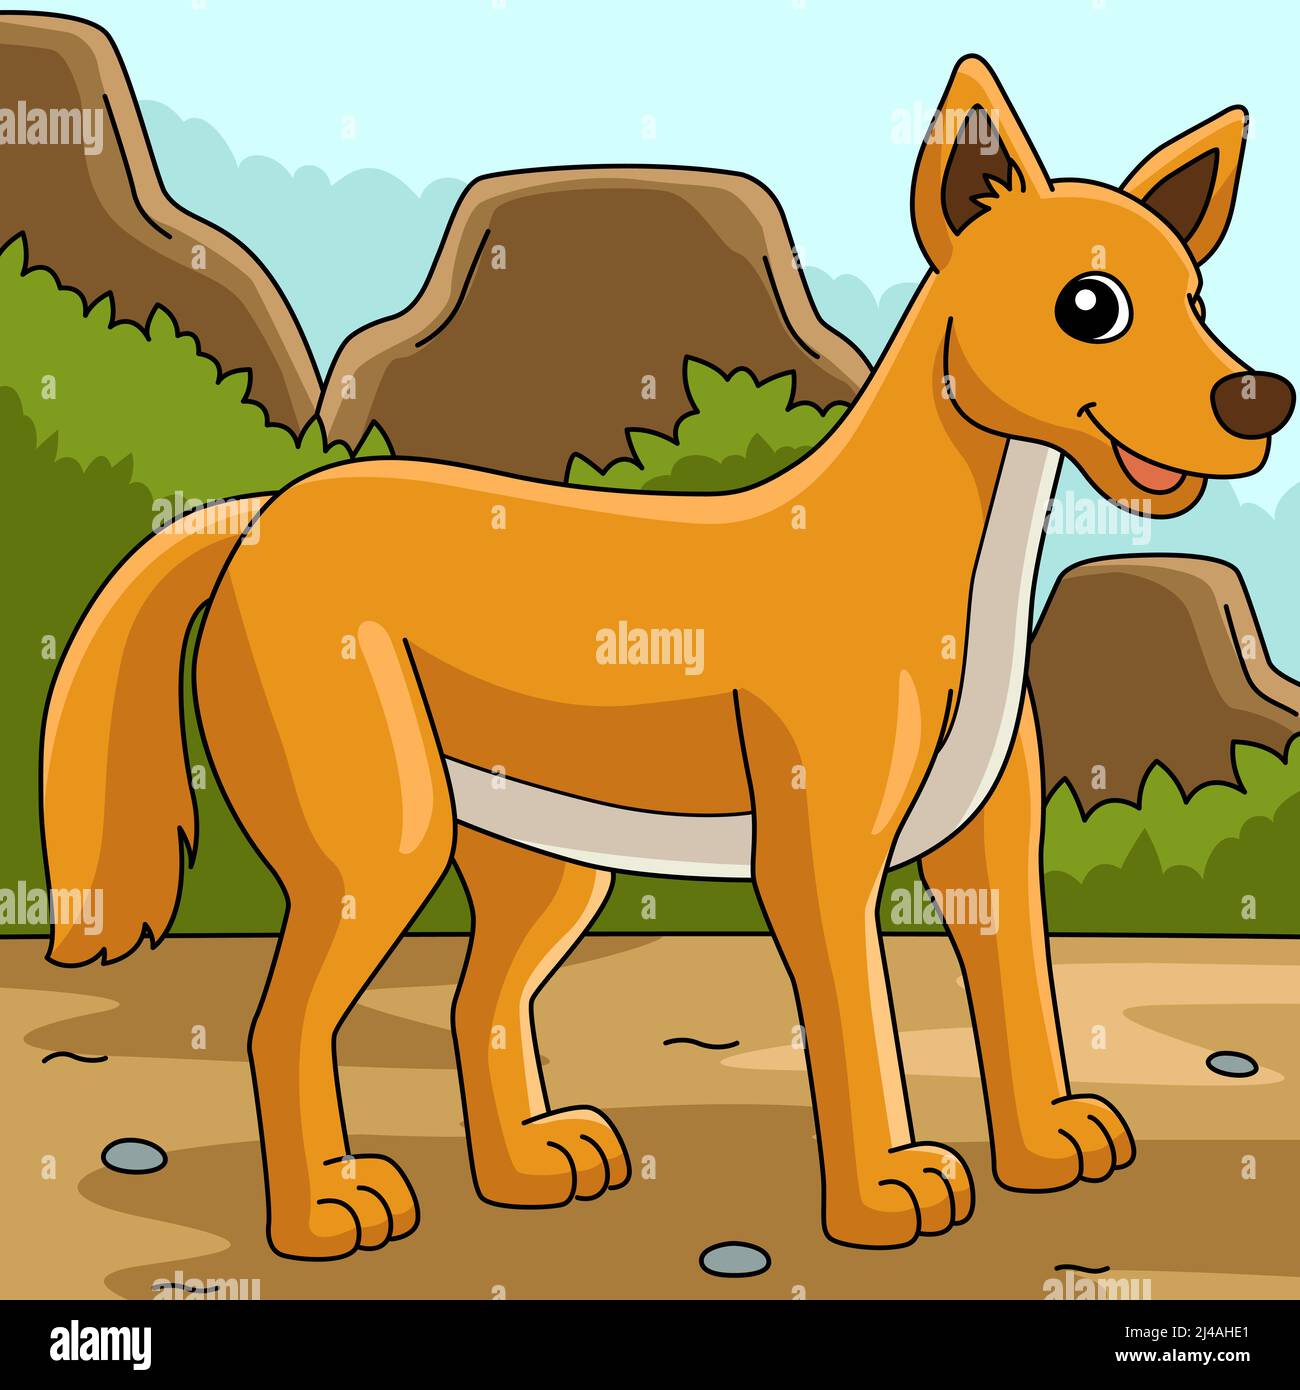 Dingo Poster Print / Infographic